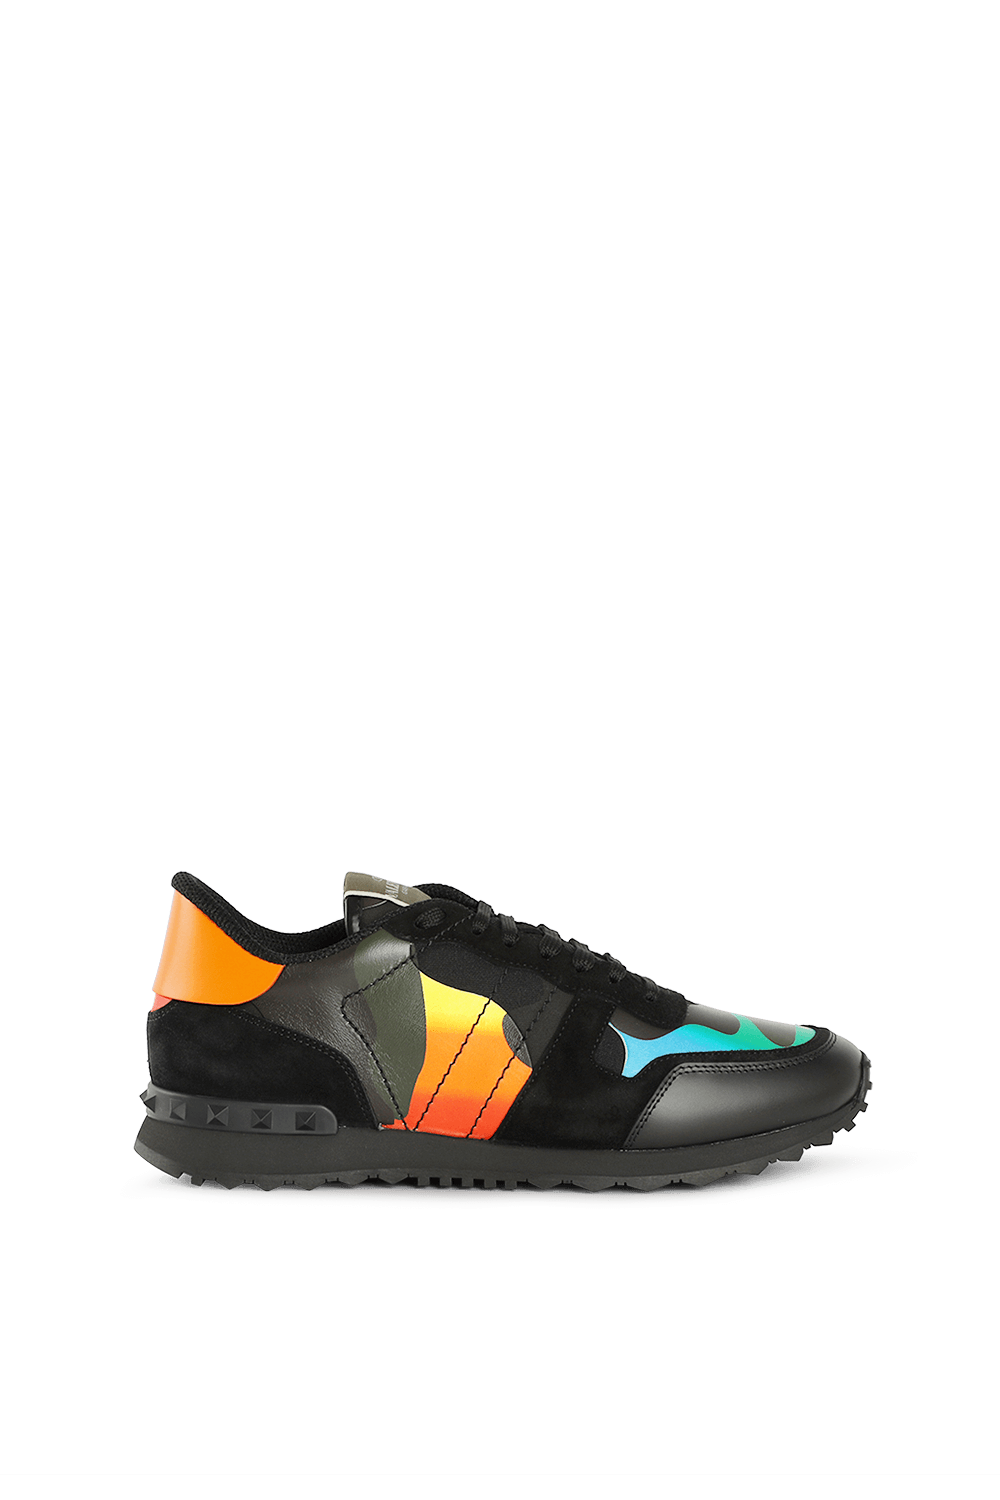 Rockrunner Sneakers in Multicolor Camo VALENTINO GARAVANI